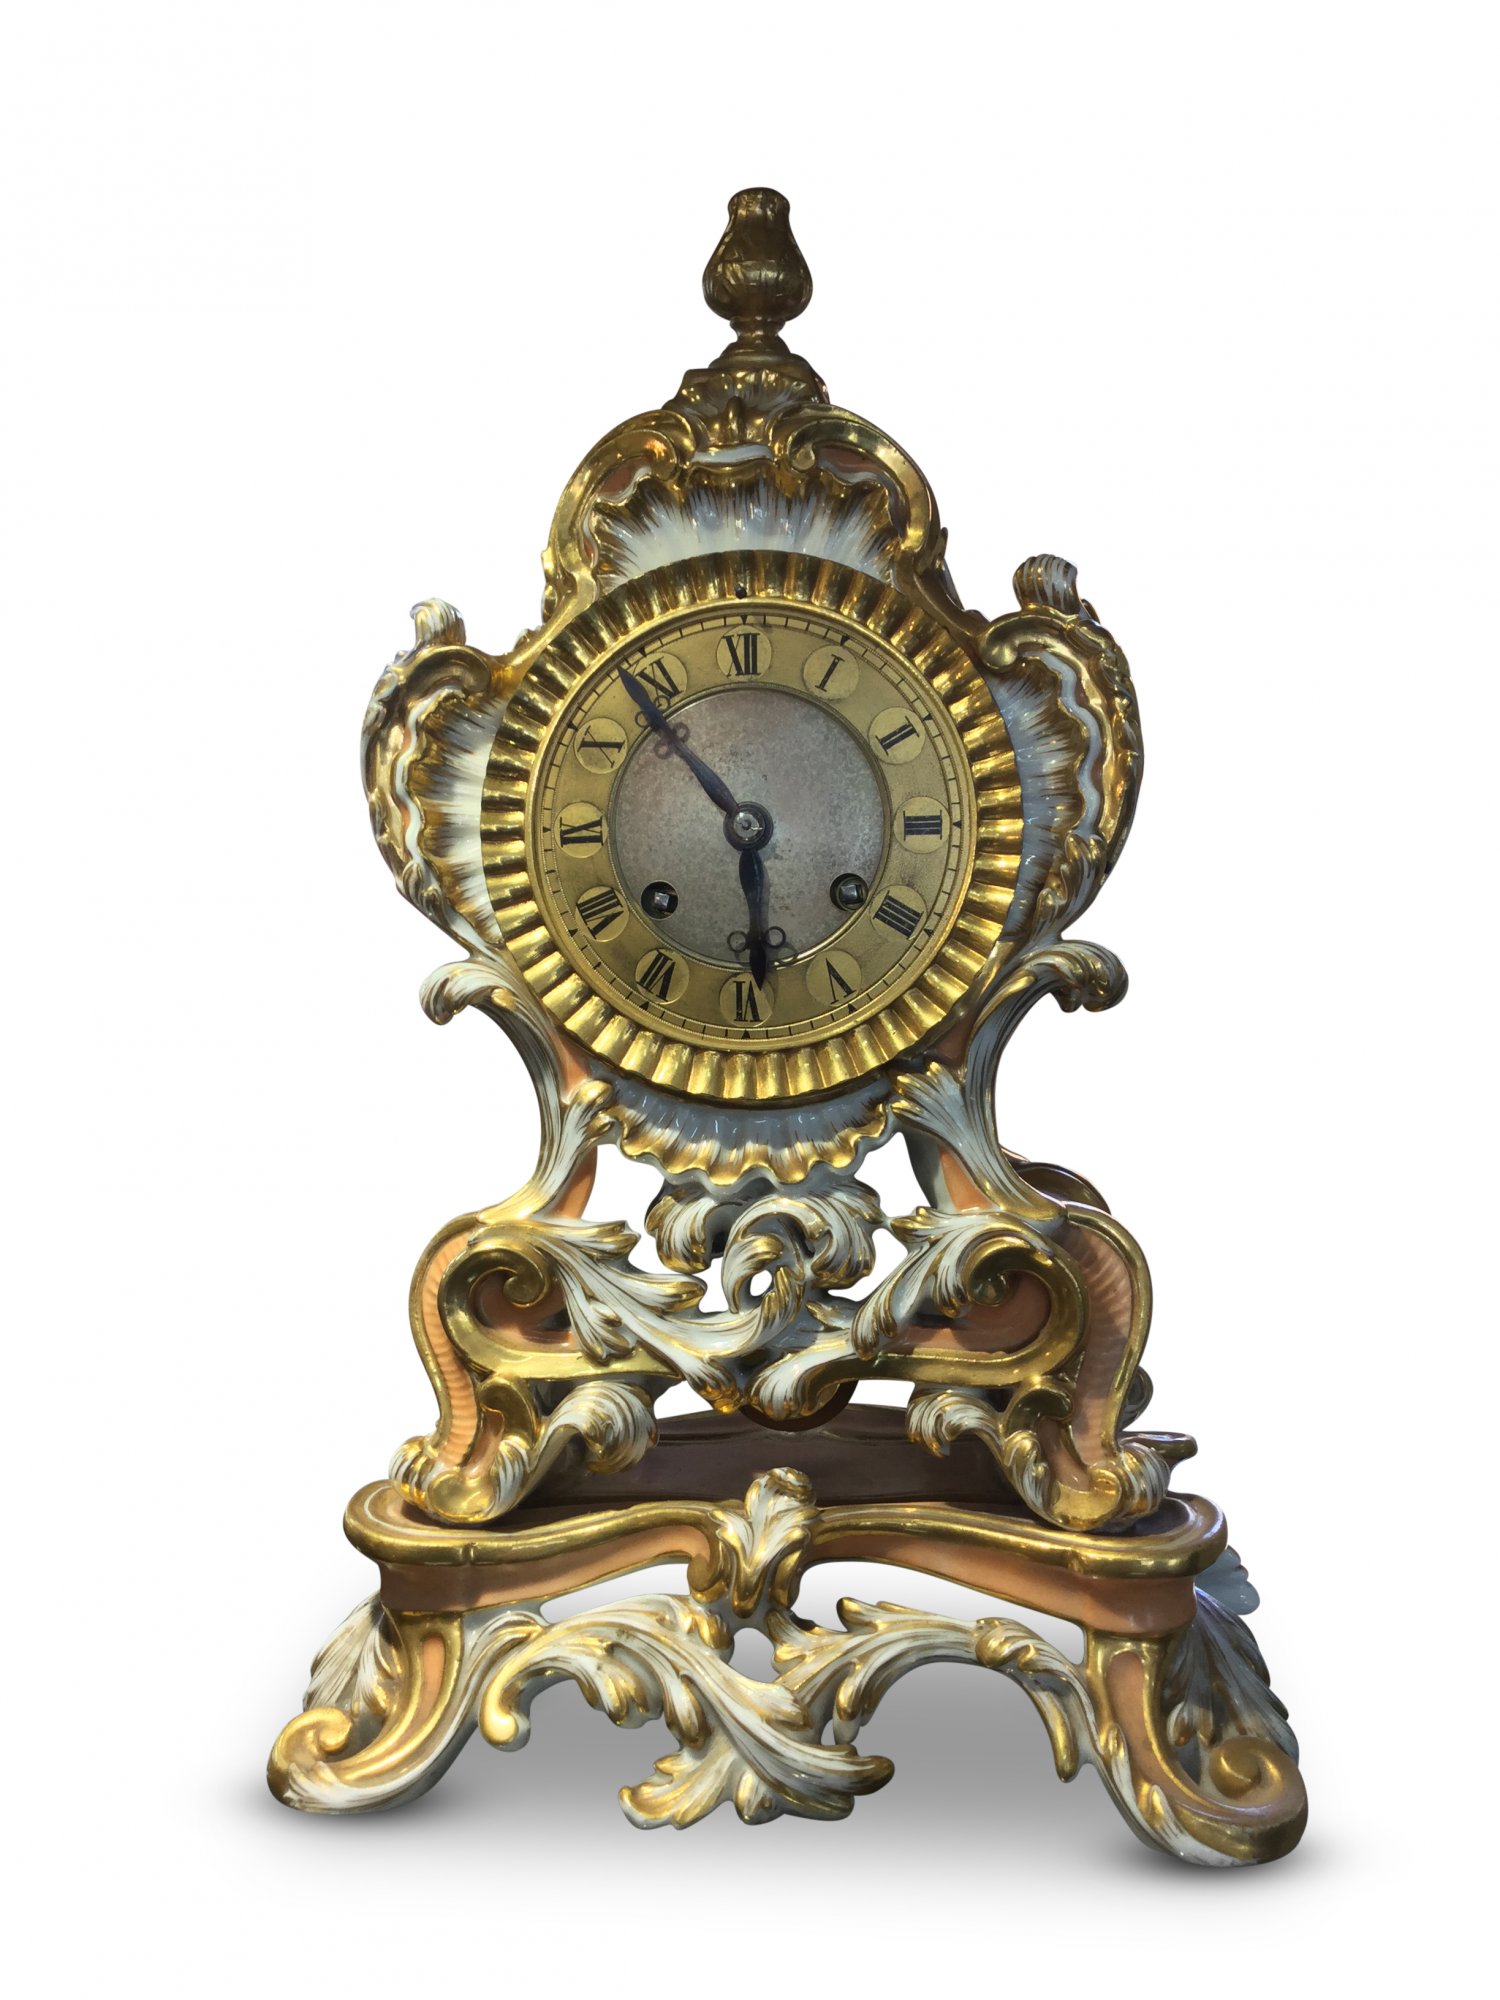 Antique French 19th-century Rococo porcelain mantel clock